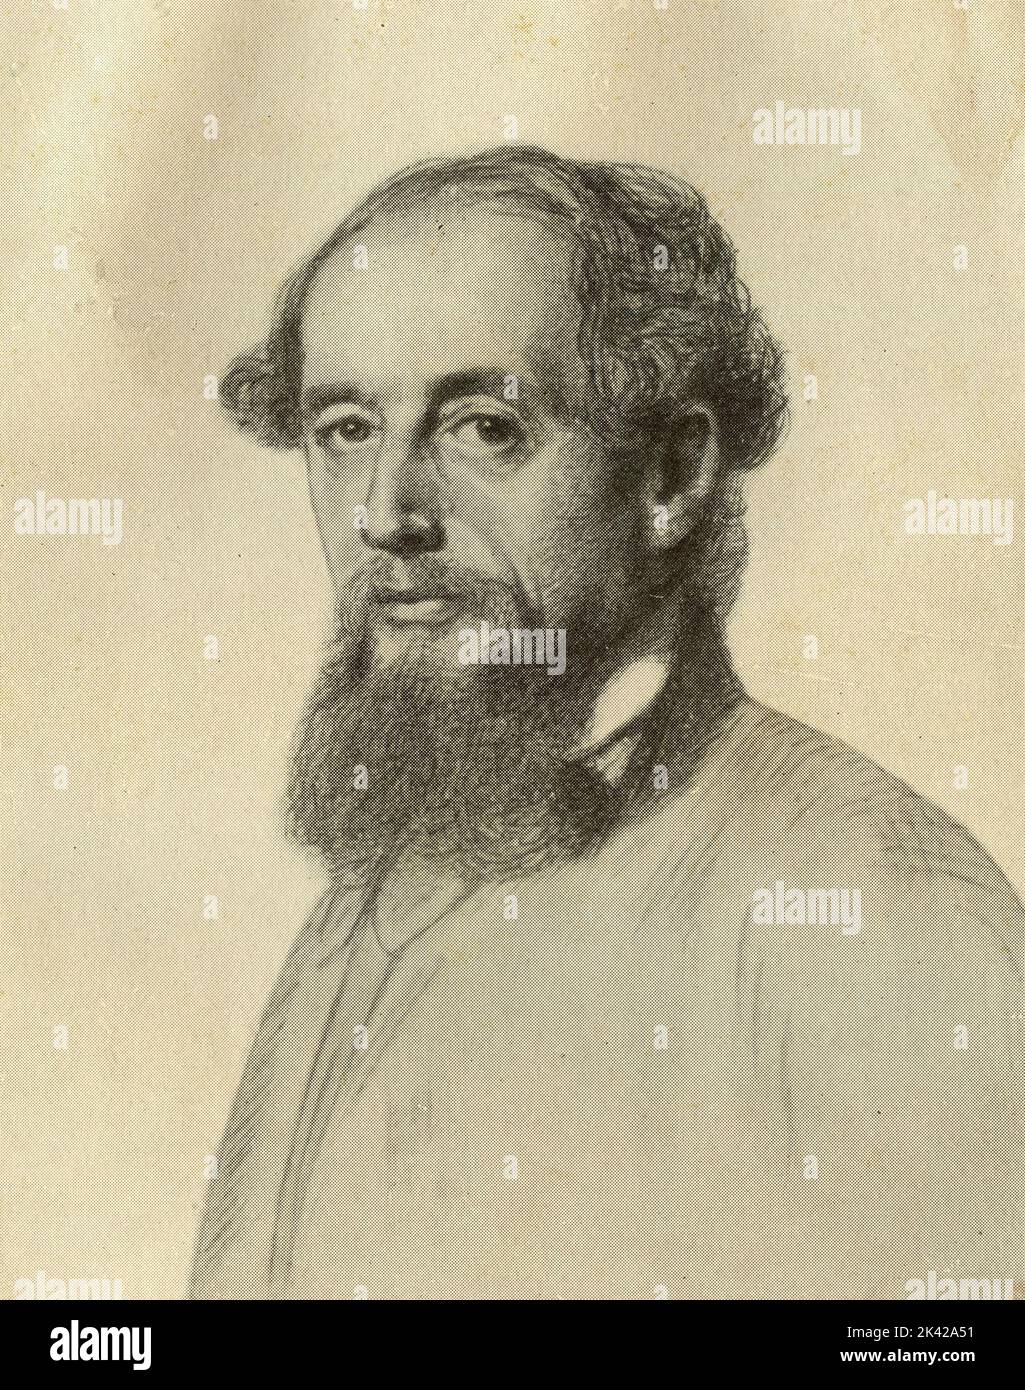 Portrait of English writer Charles Dickens, illustration, 1860s Stock Photo